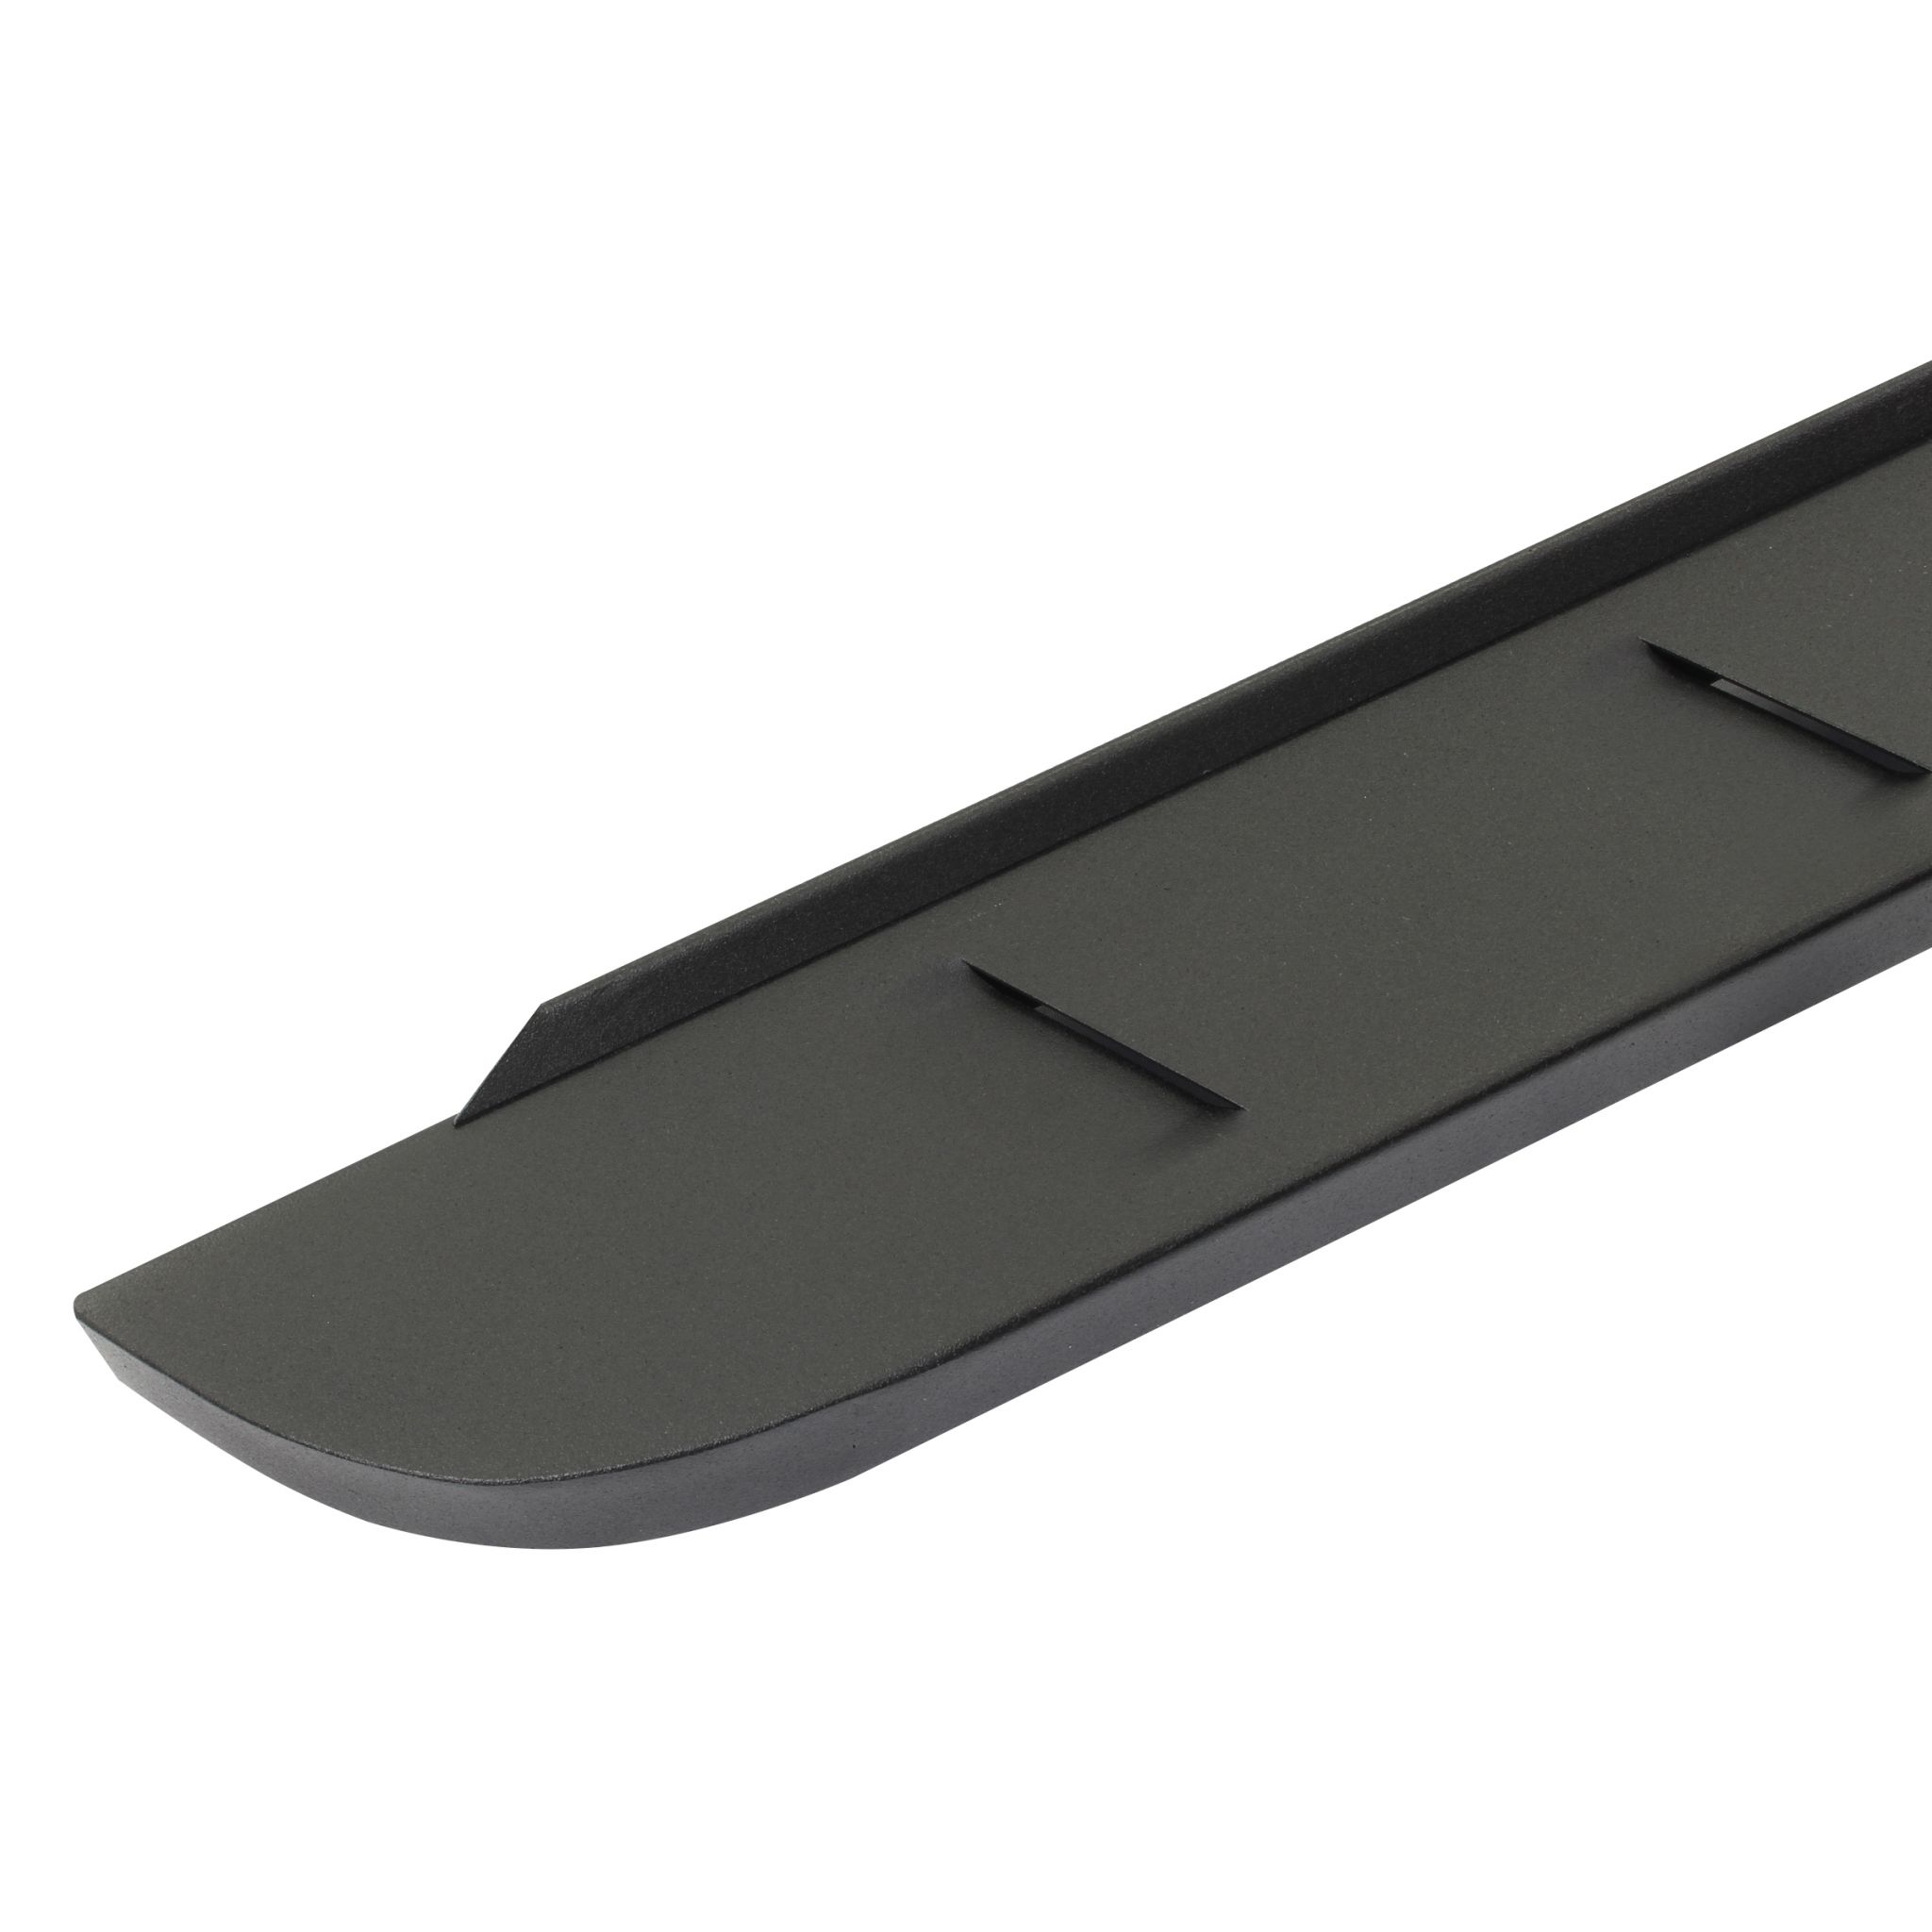 Go Rhino 63443973SPC - RB10 Slim Running boards - Complete Kit: RB10 Slim Running board + Brackets - Textured Black